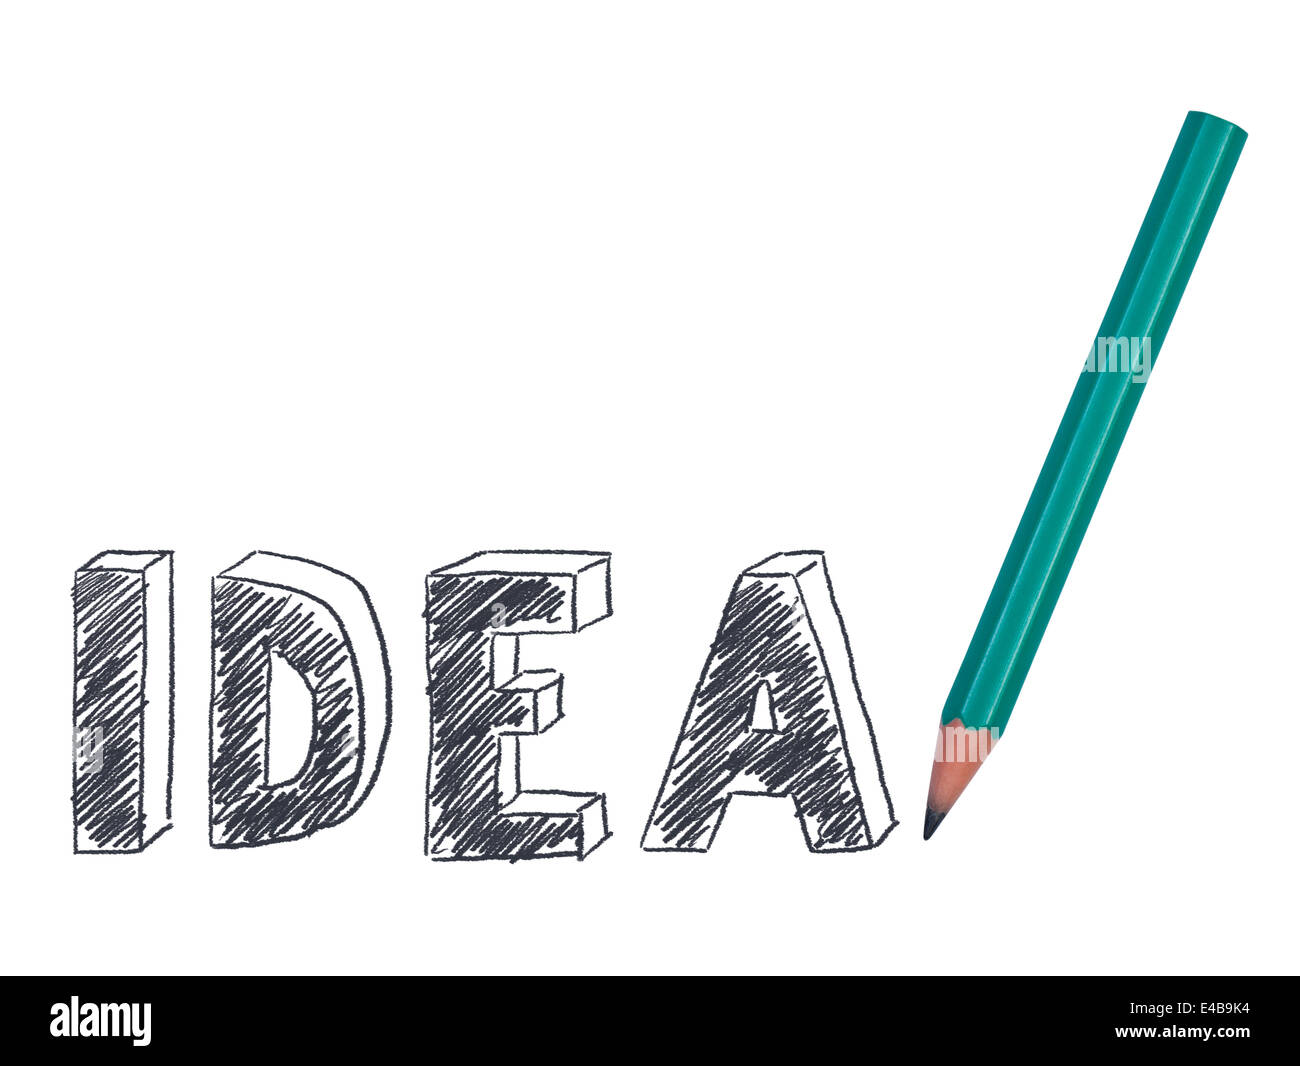 Word idea drawn pencil. Stock Photo